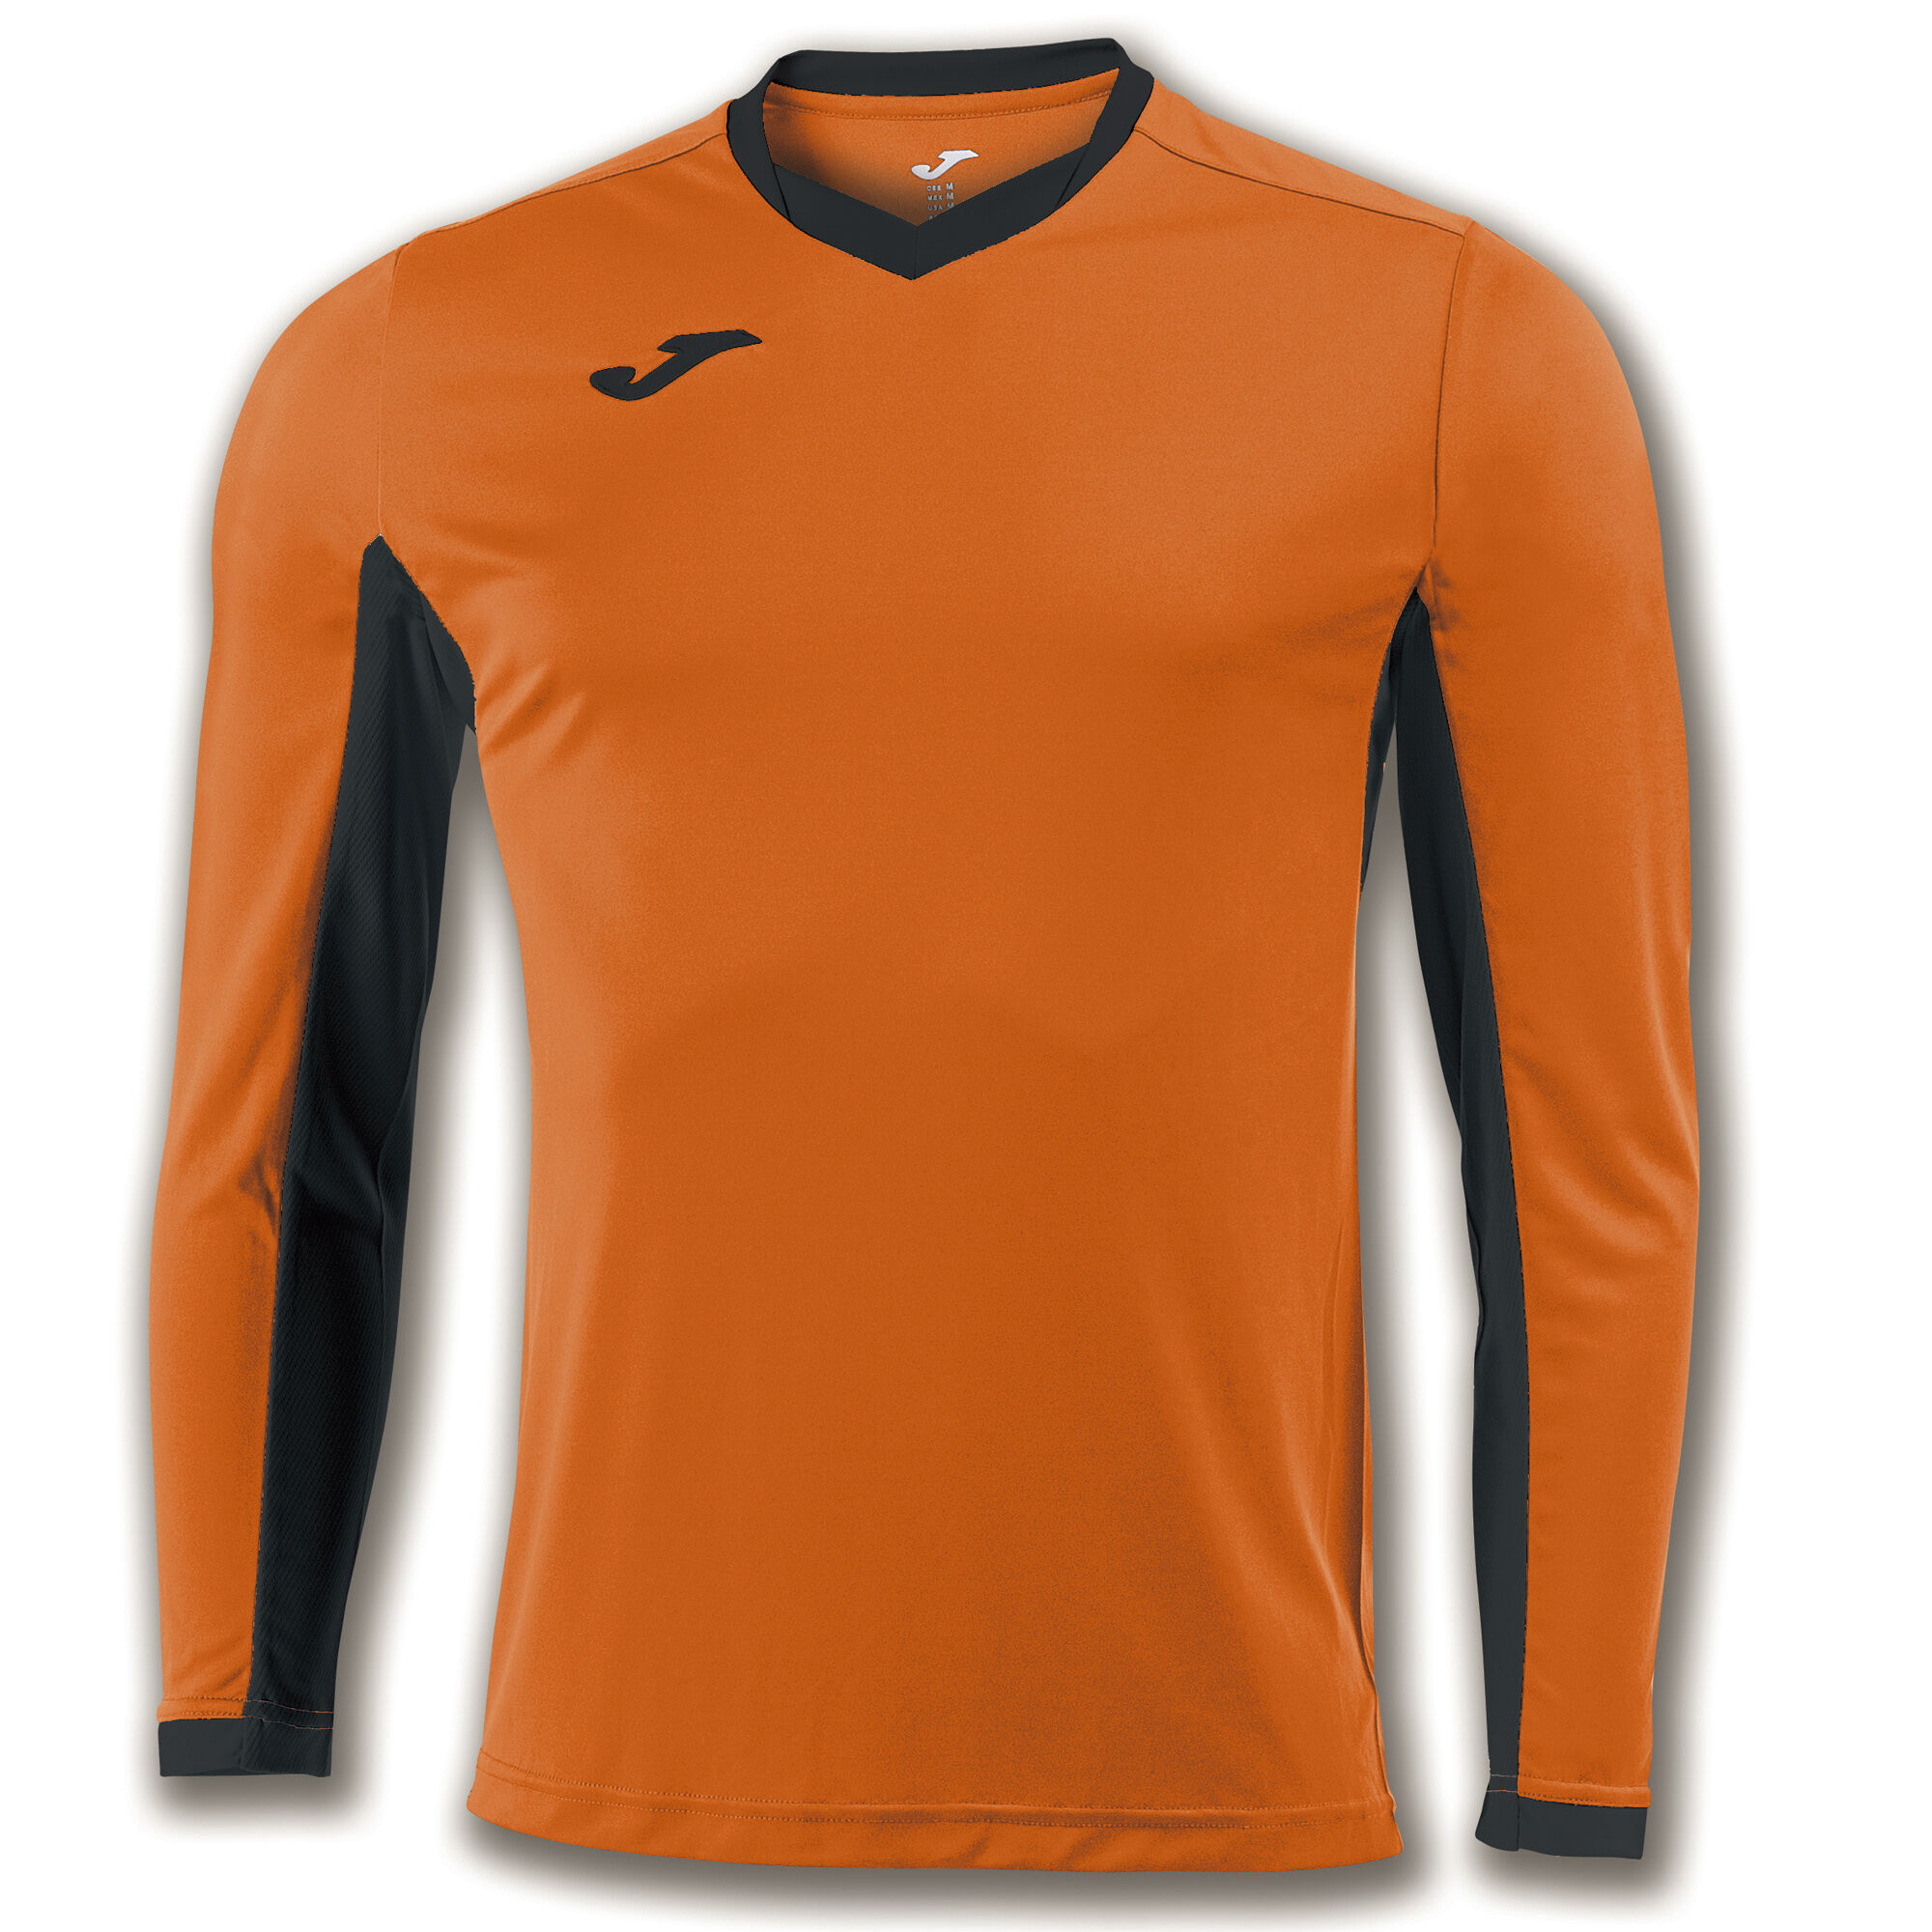 Camiseta manga larga hombre Championship IV naranja negro